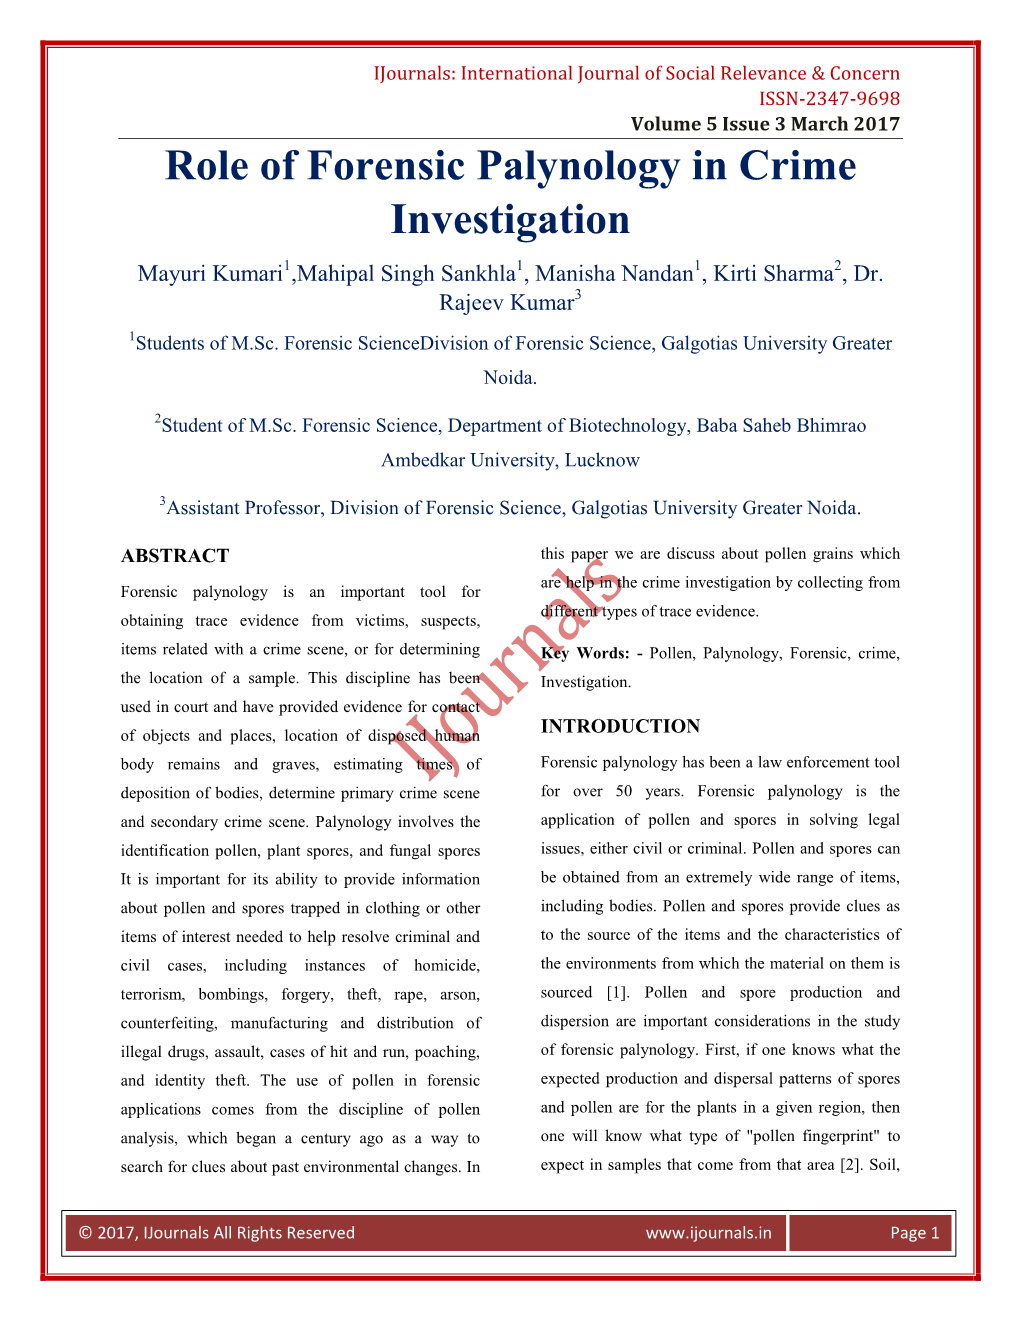 Role of Forensic Palynology in Crime Investigation Mayuri Kumari1,Mahipal Singh Sankhla1, Manisha Nandan1, Kirti Sharma2, Dr